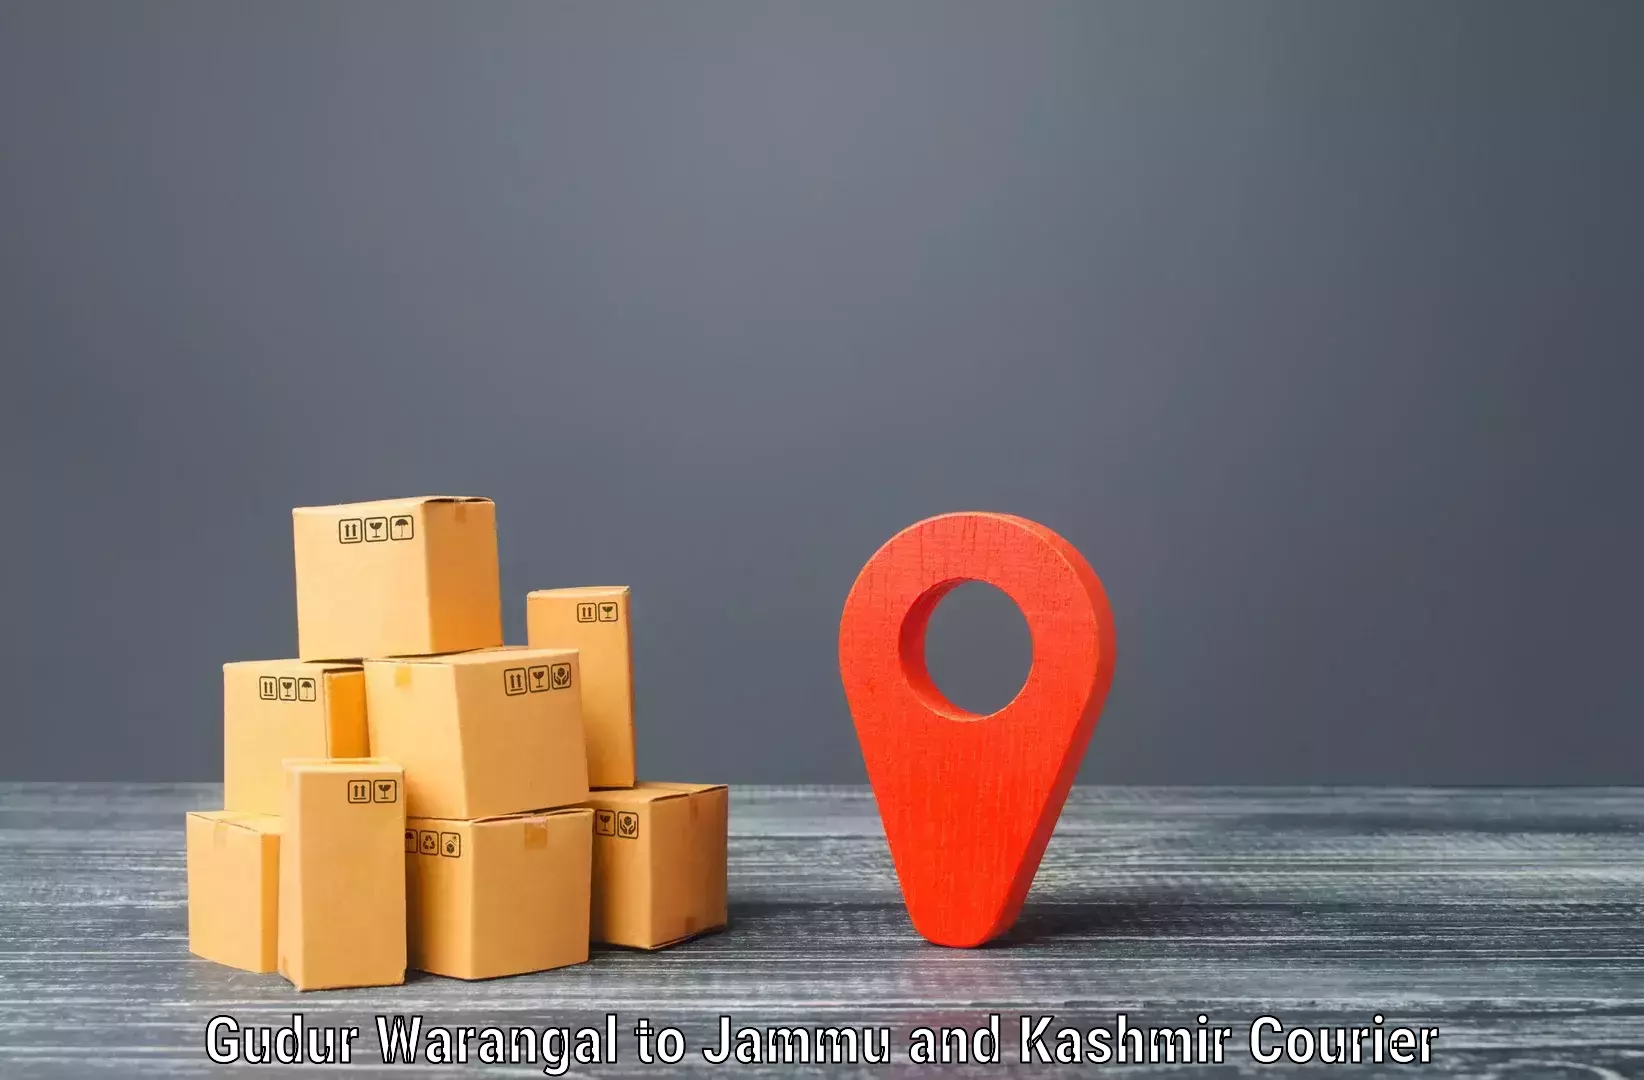 Efficient cargo services Gudur Warangal to University of Jammu